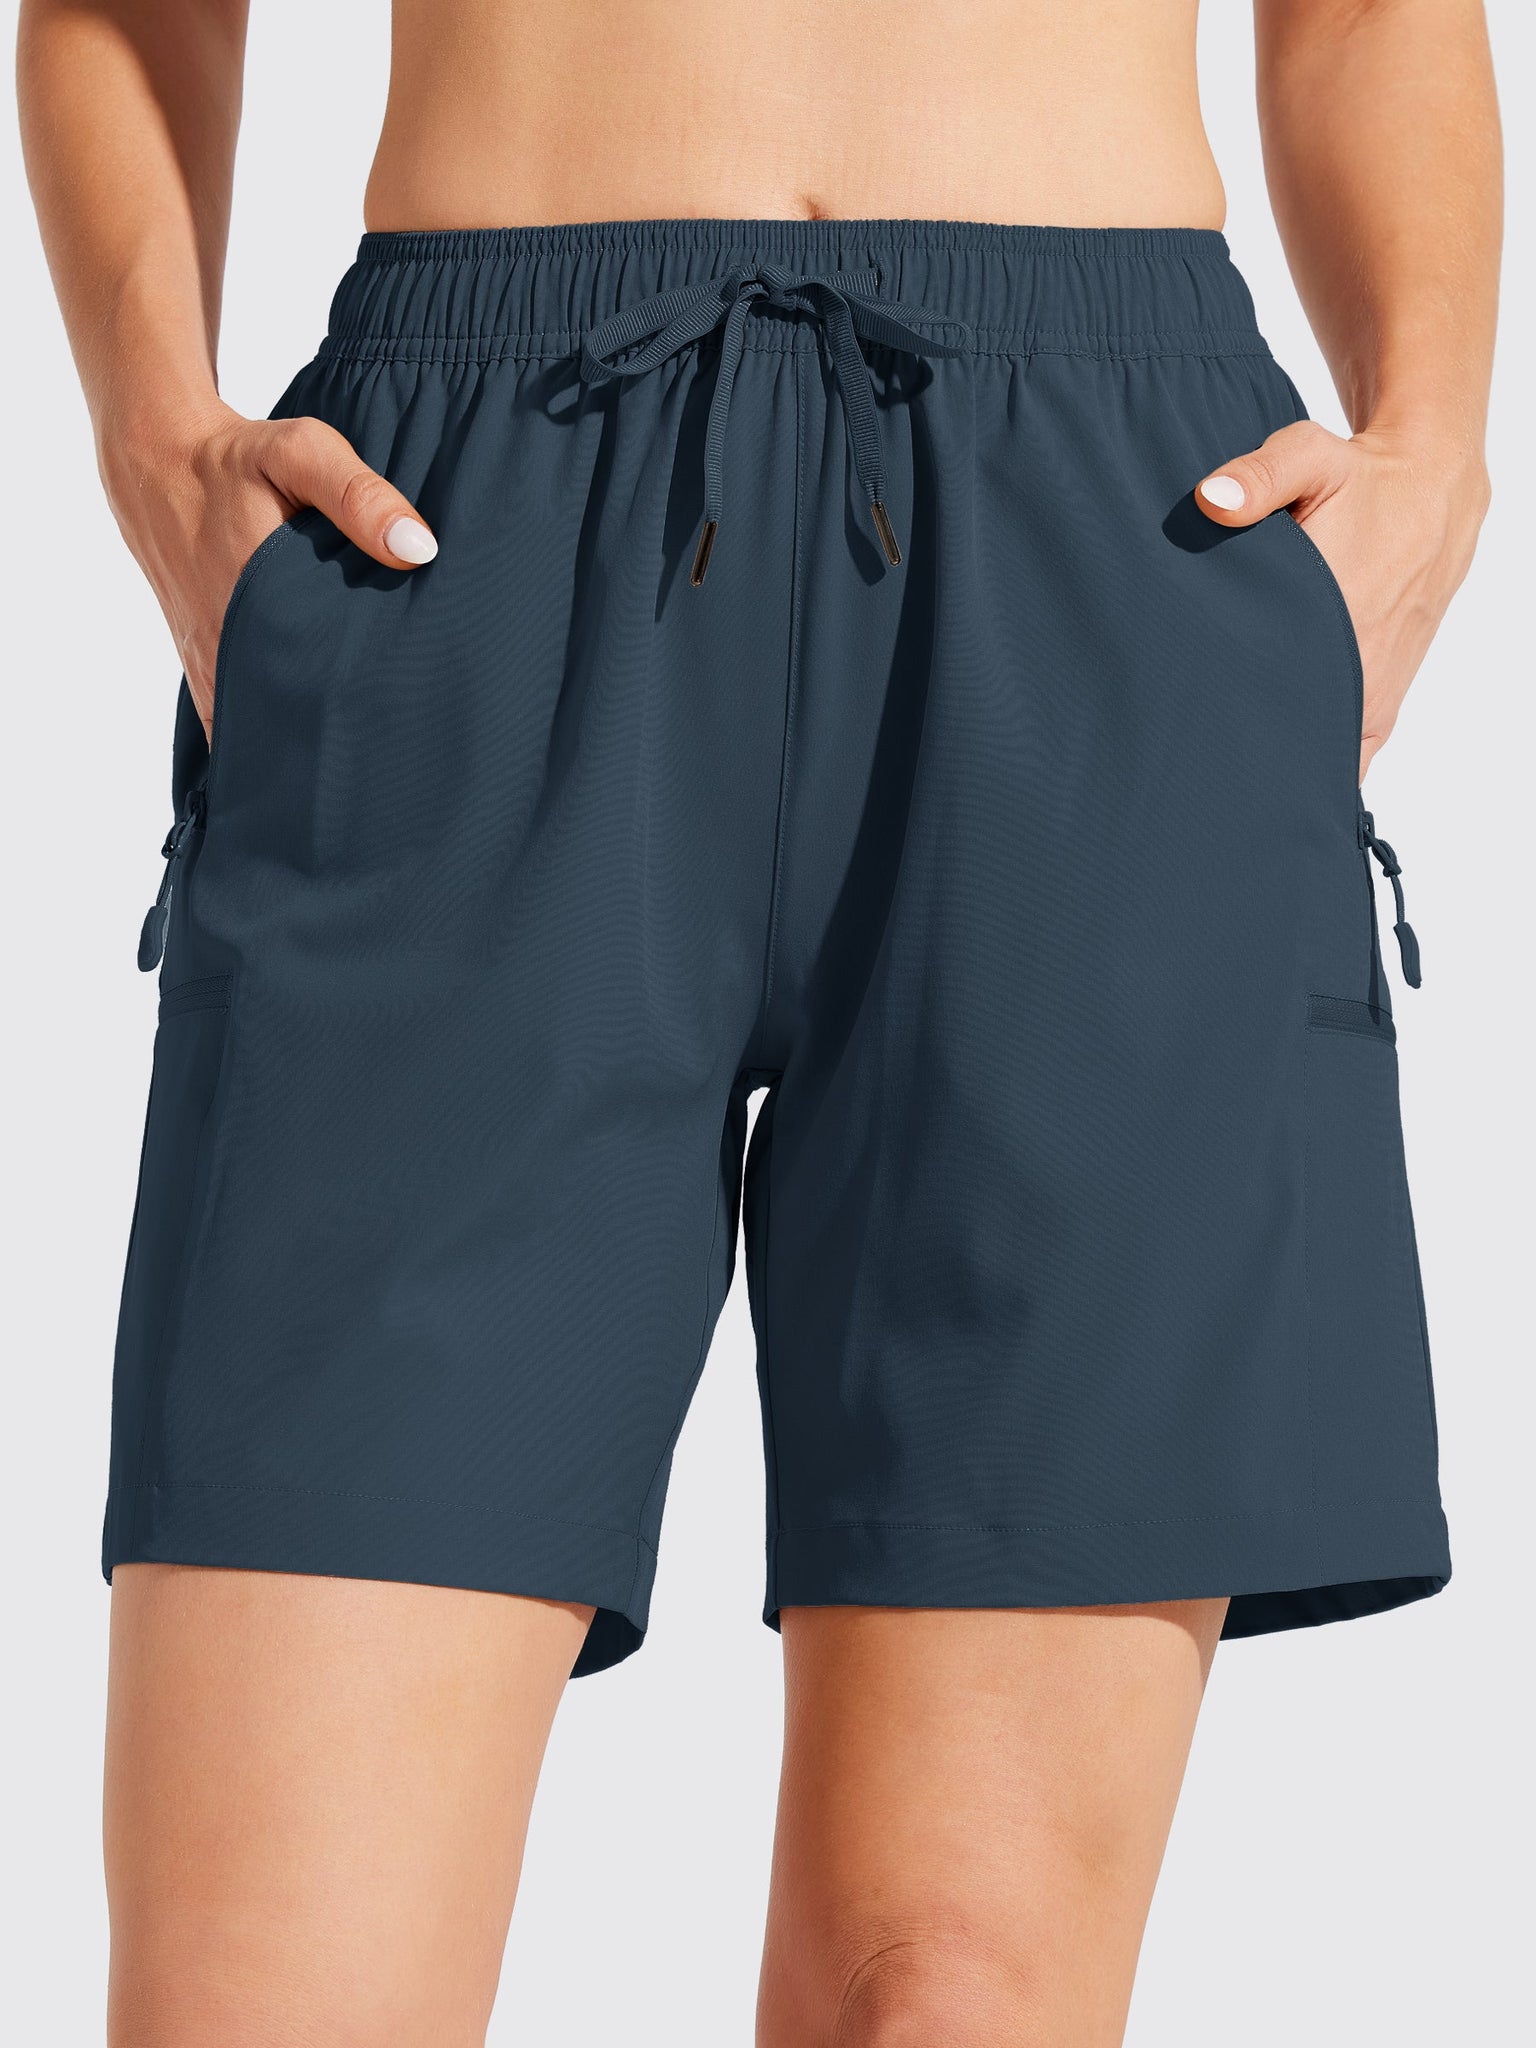 Women's Hiking Athletic Shorts_Navy4